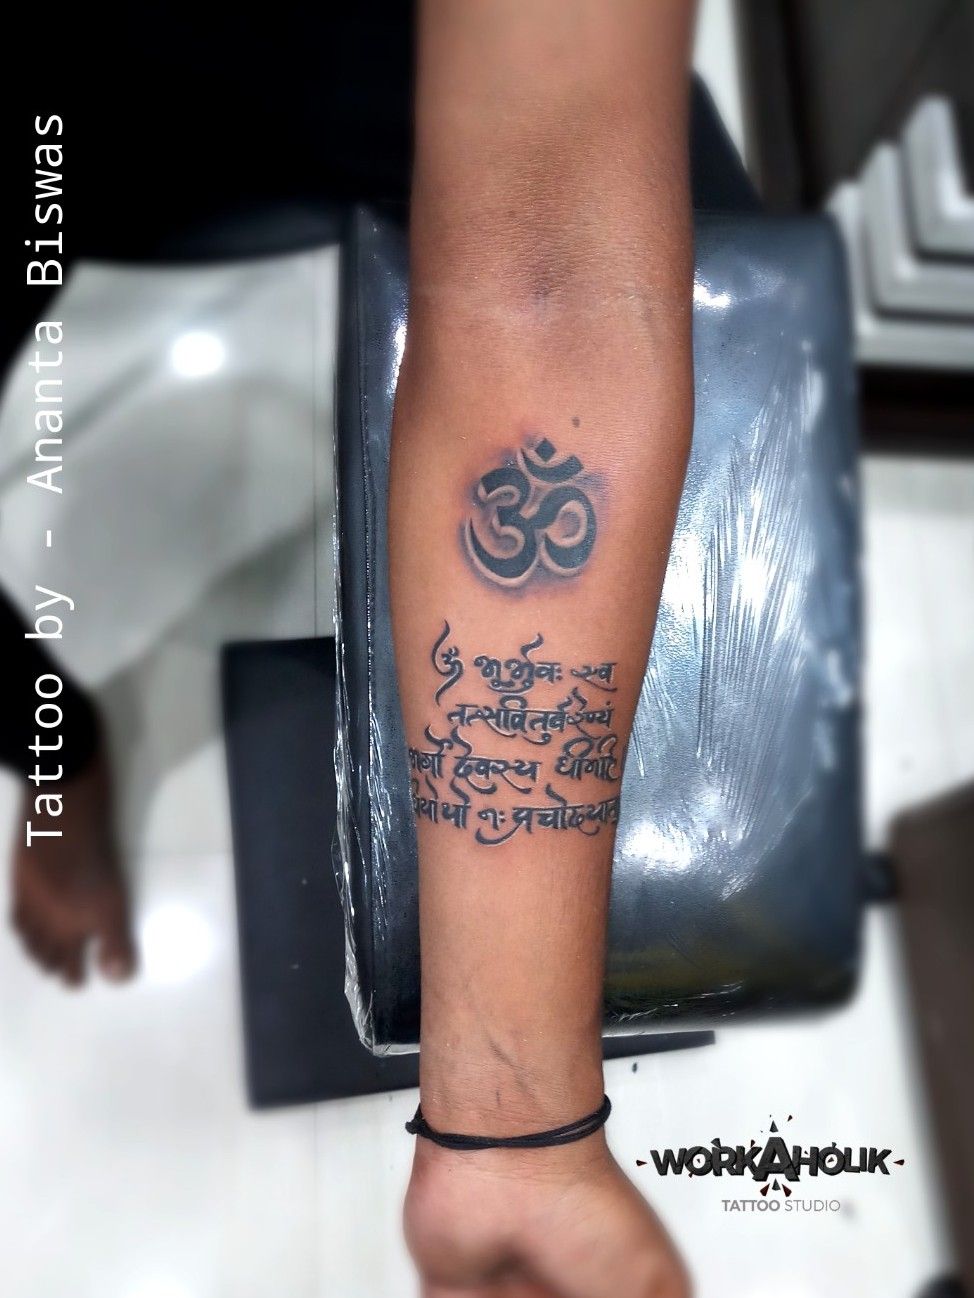 Person with black tattoo on wrist photo – Free Tattoo Image on Unsplash